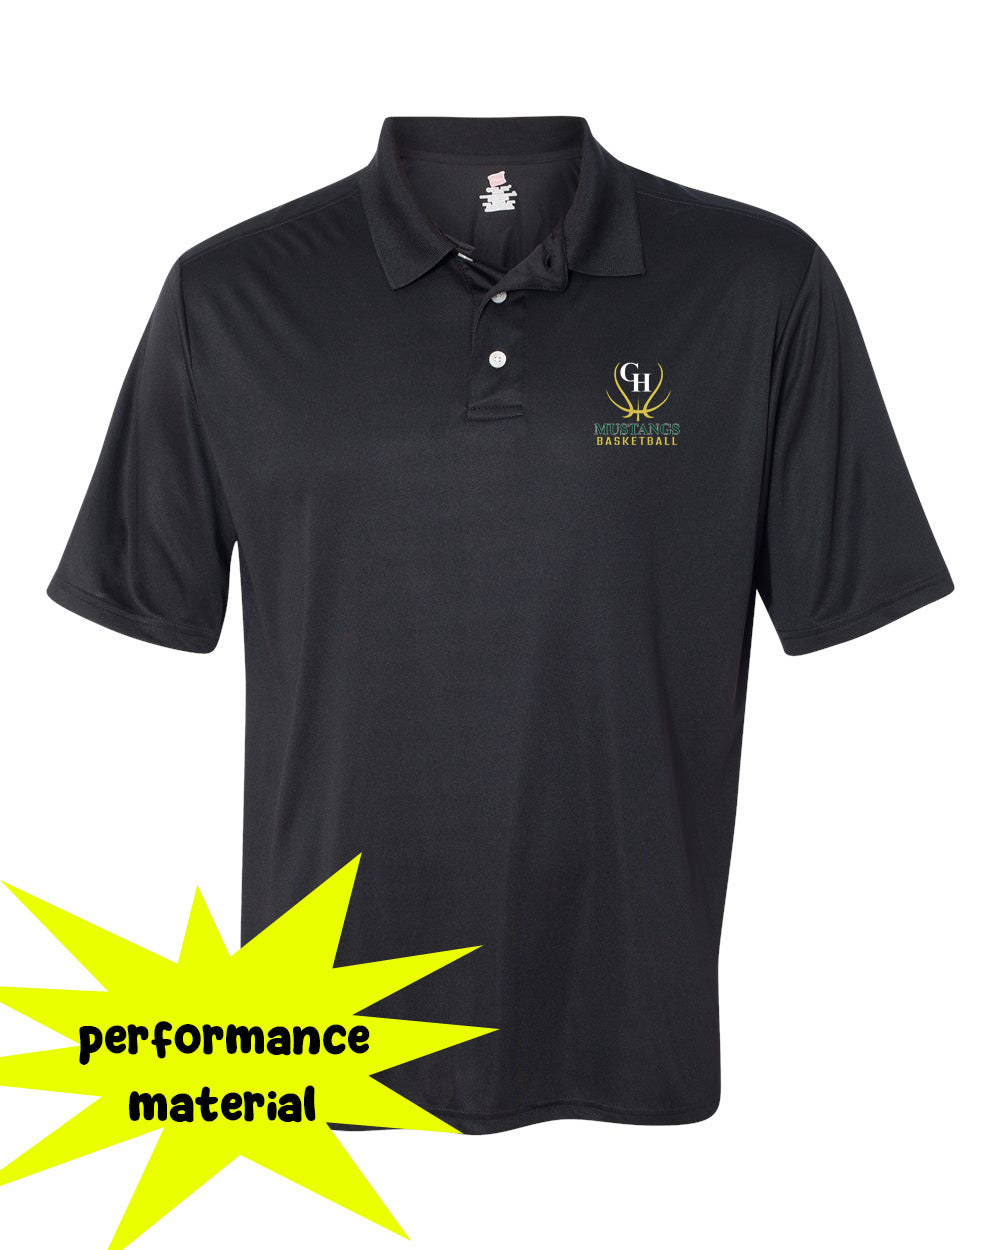 Green Hills Basketball Performance Material Polo T-Shirt Design 7